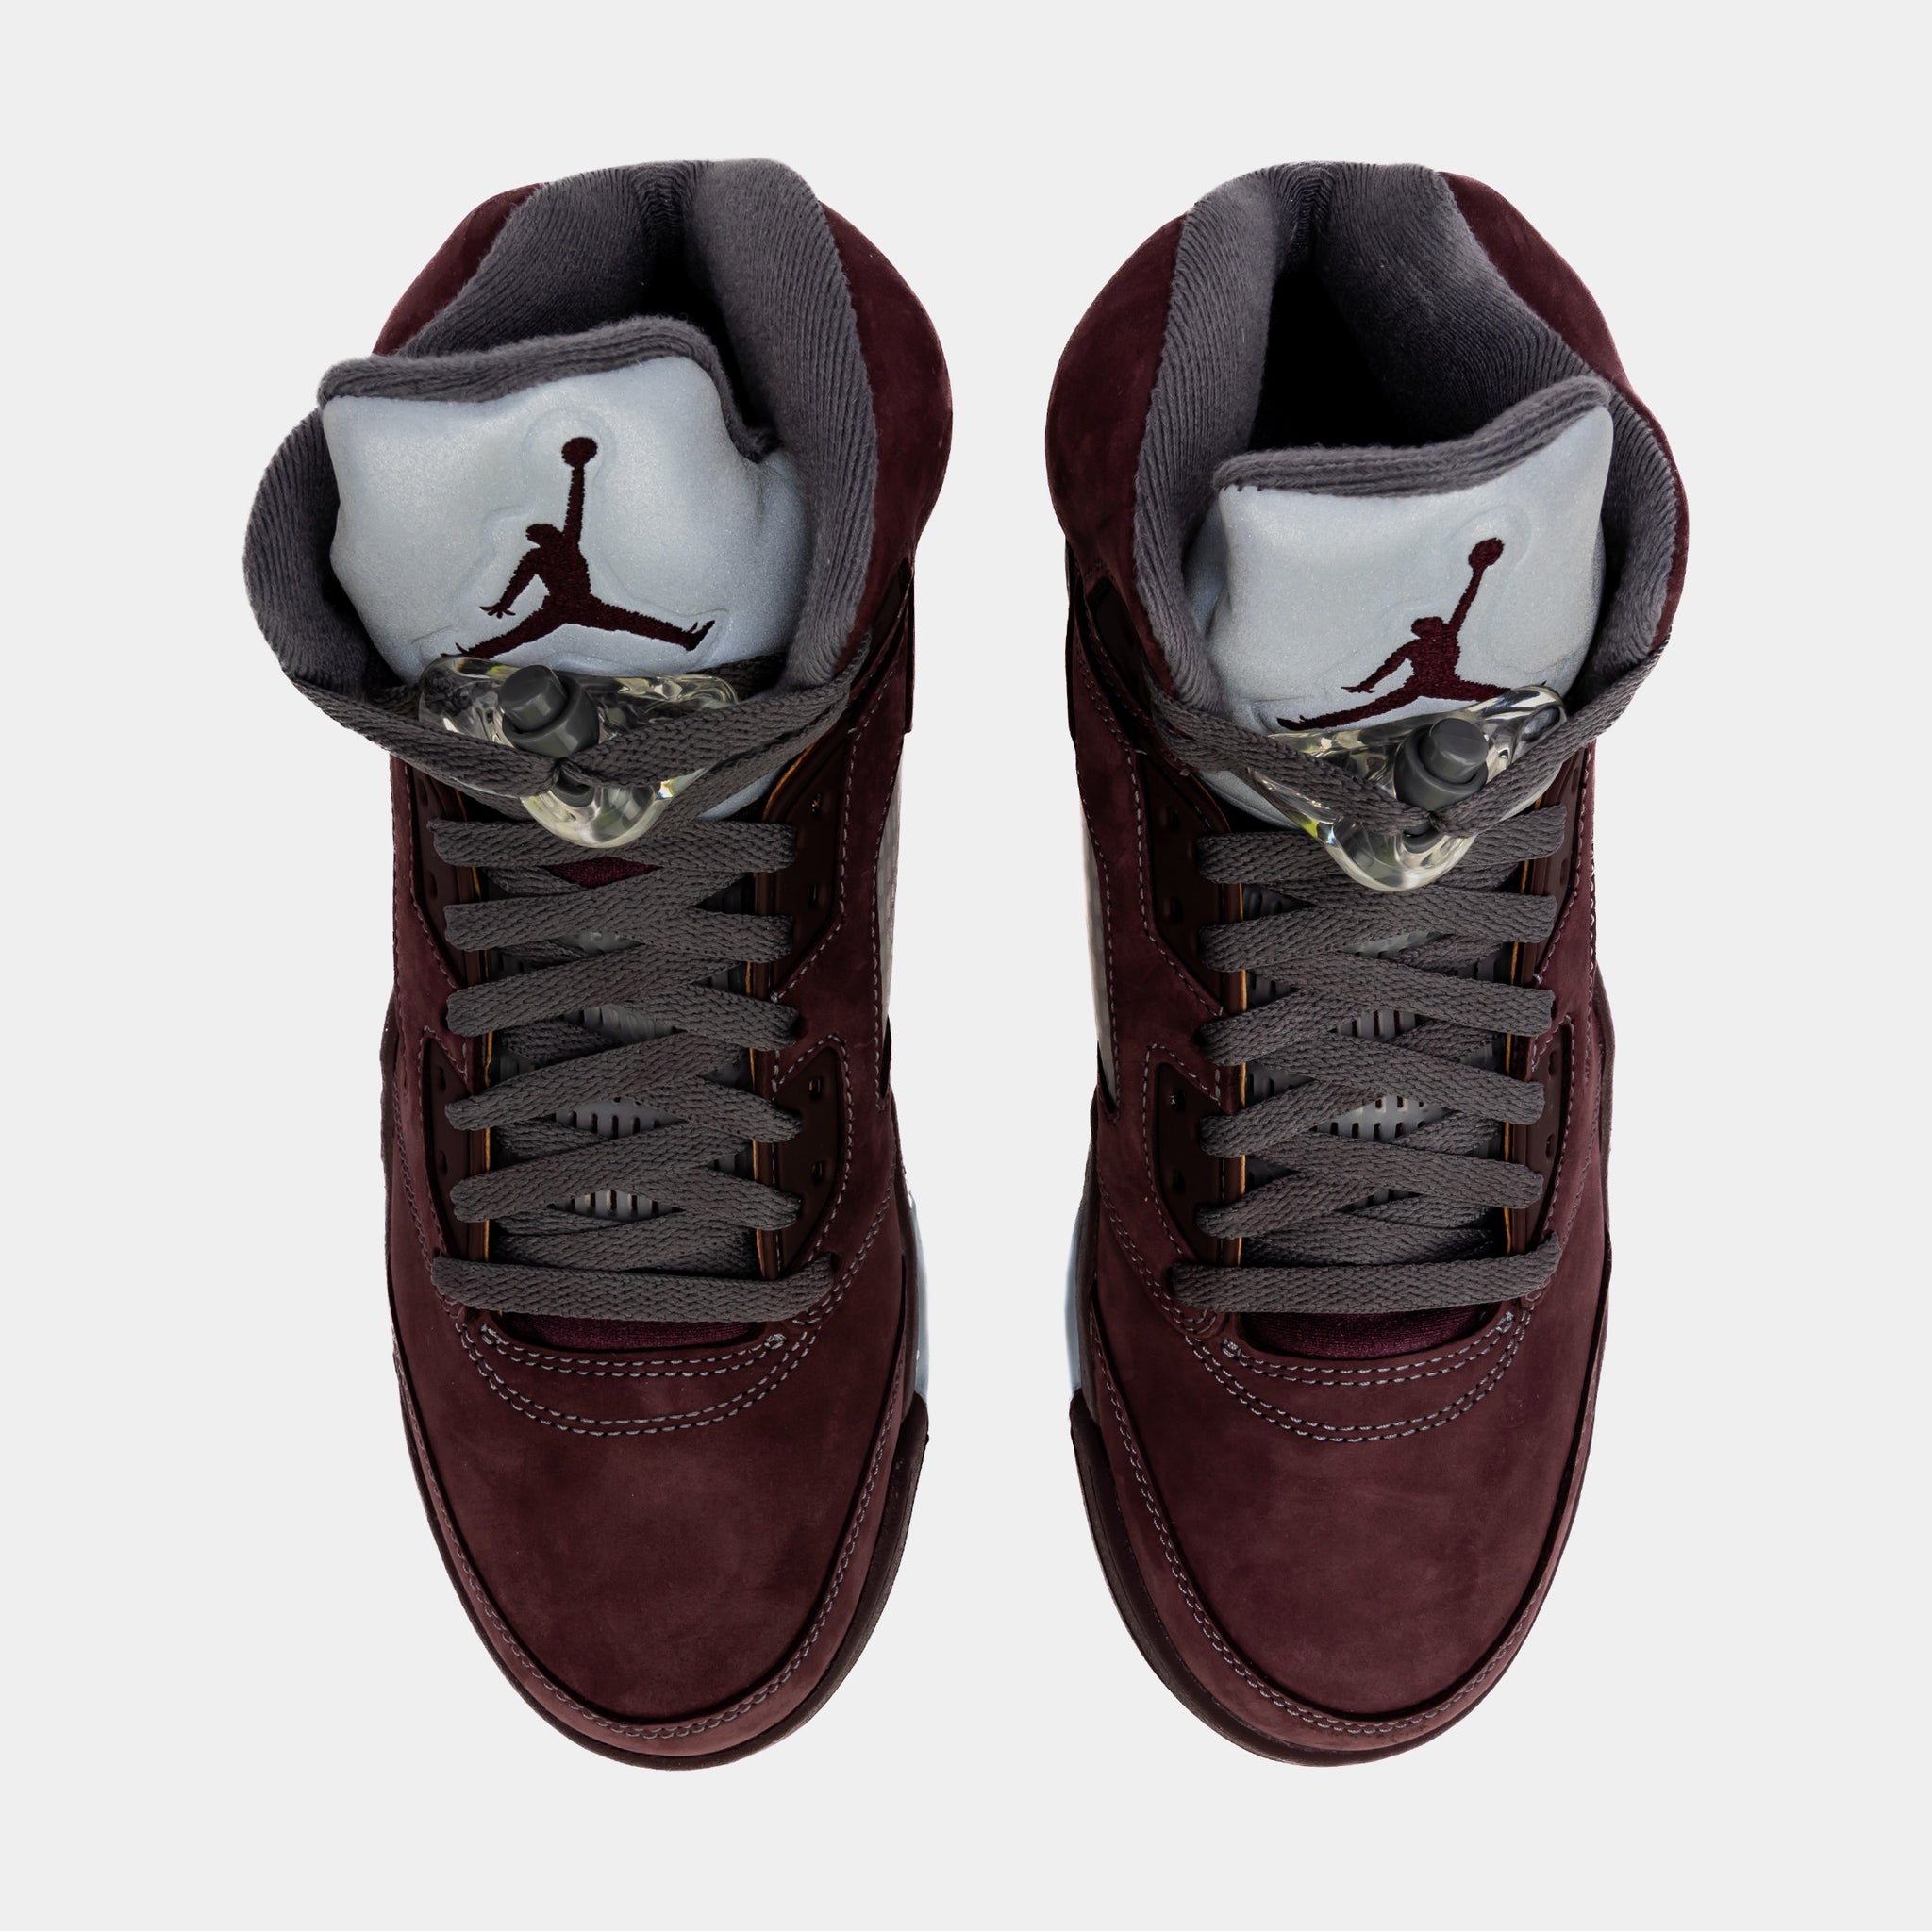 Air Jordan 5 Retro Burgundy Mens Lifestyle Shoes (Burgundy)